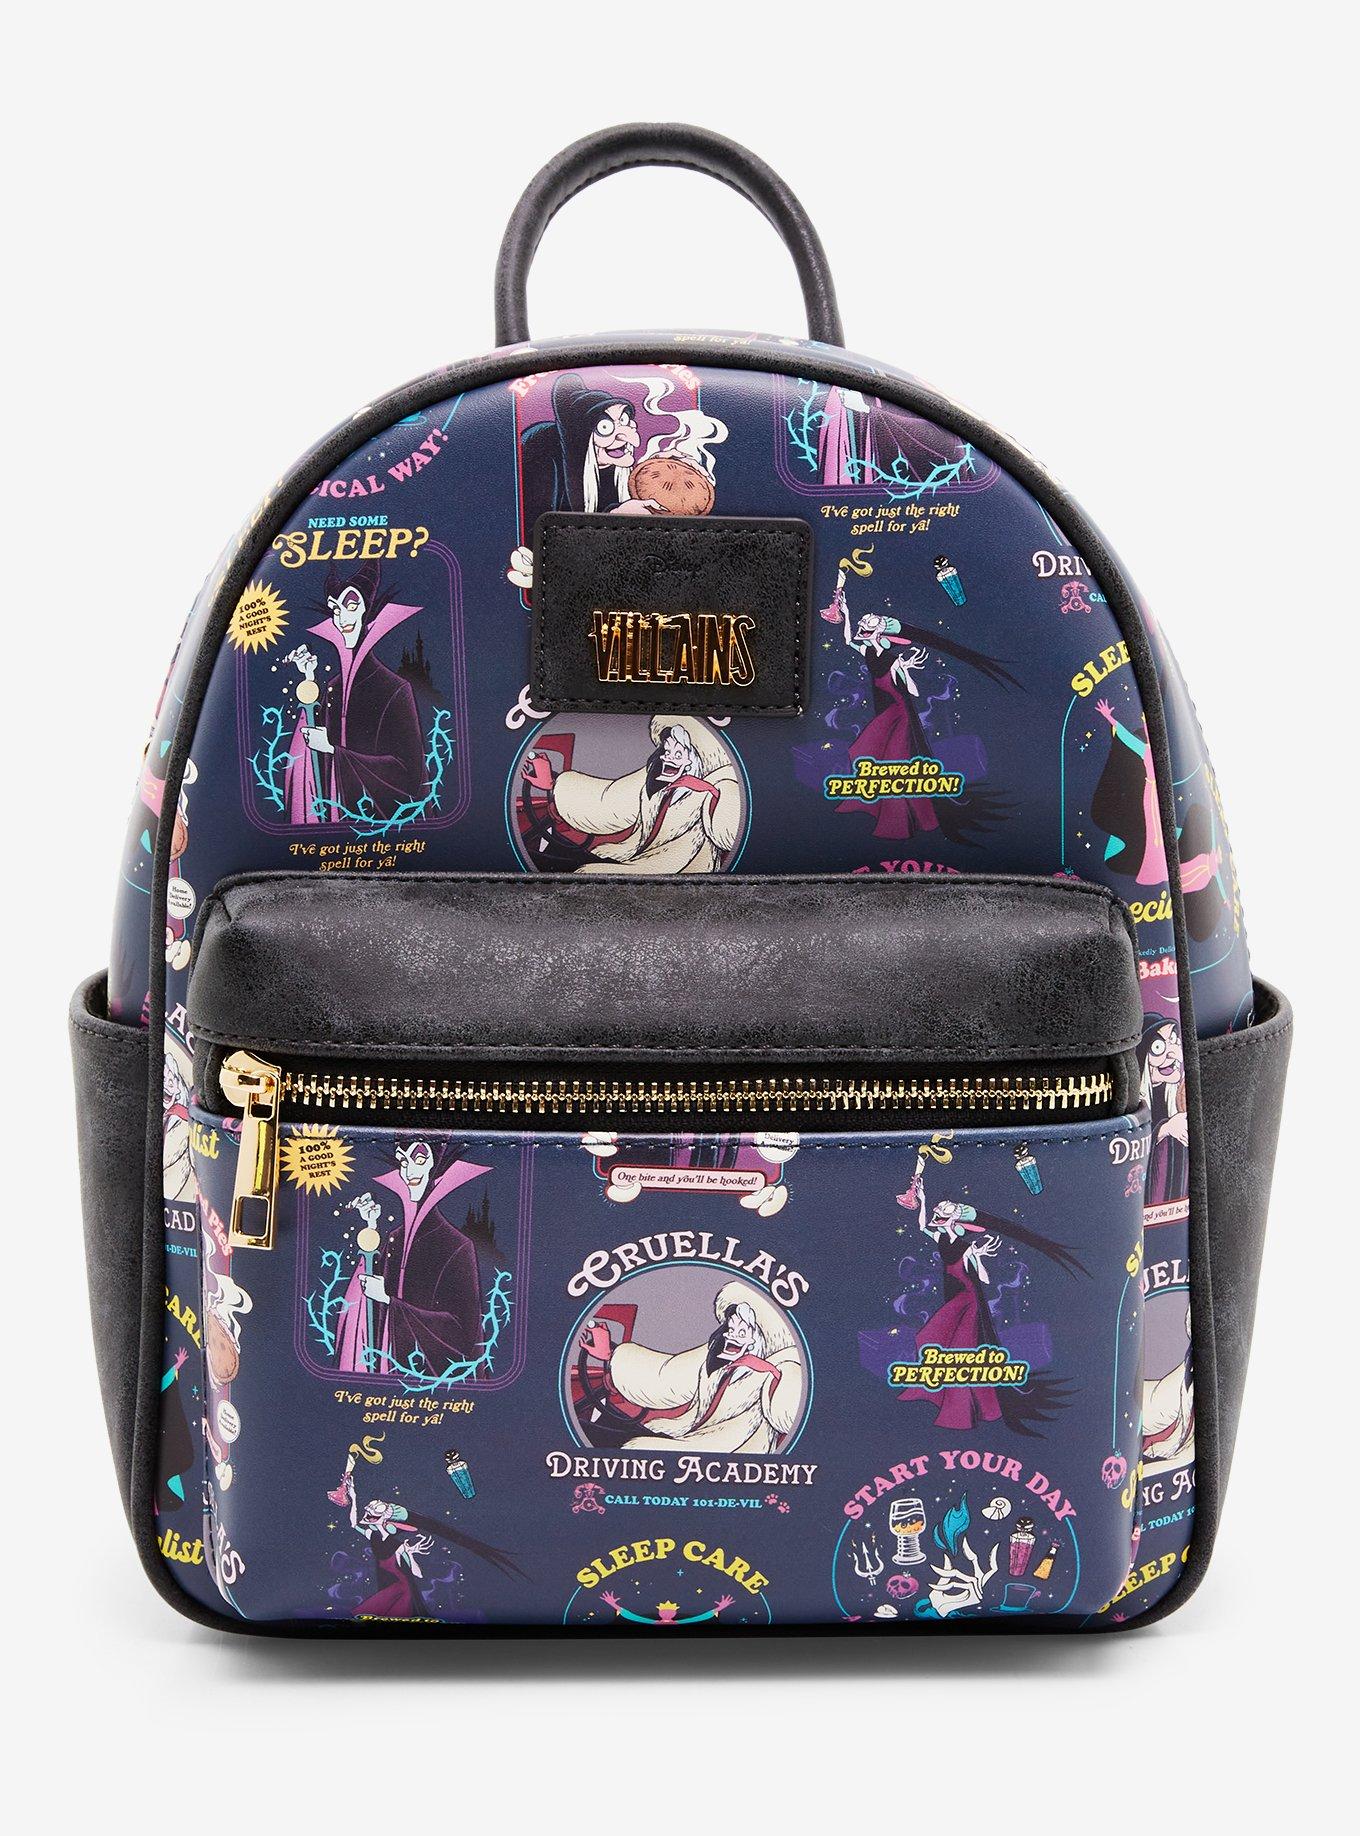 Loungefly x Disney Villains Mini Backpack Handbag All-Over Print Cruel –  Open and Clothing